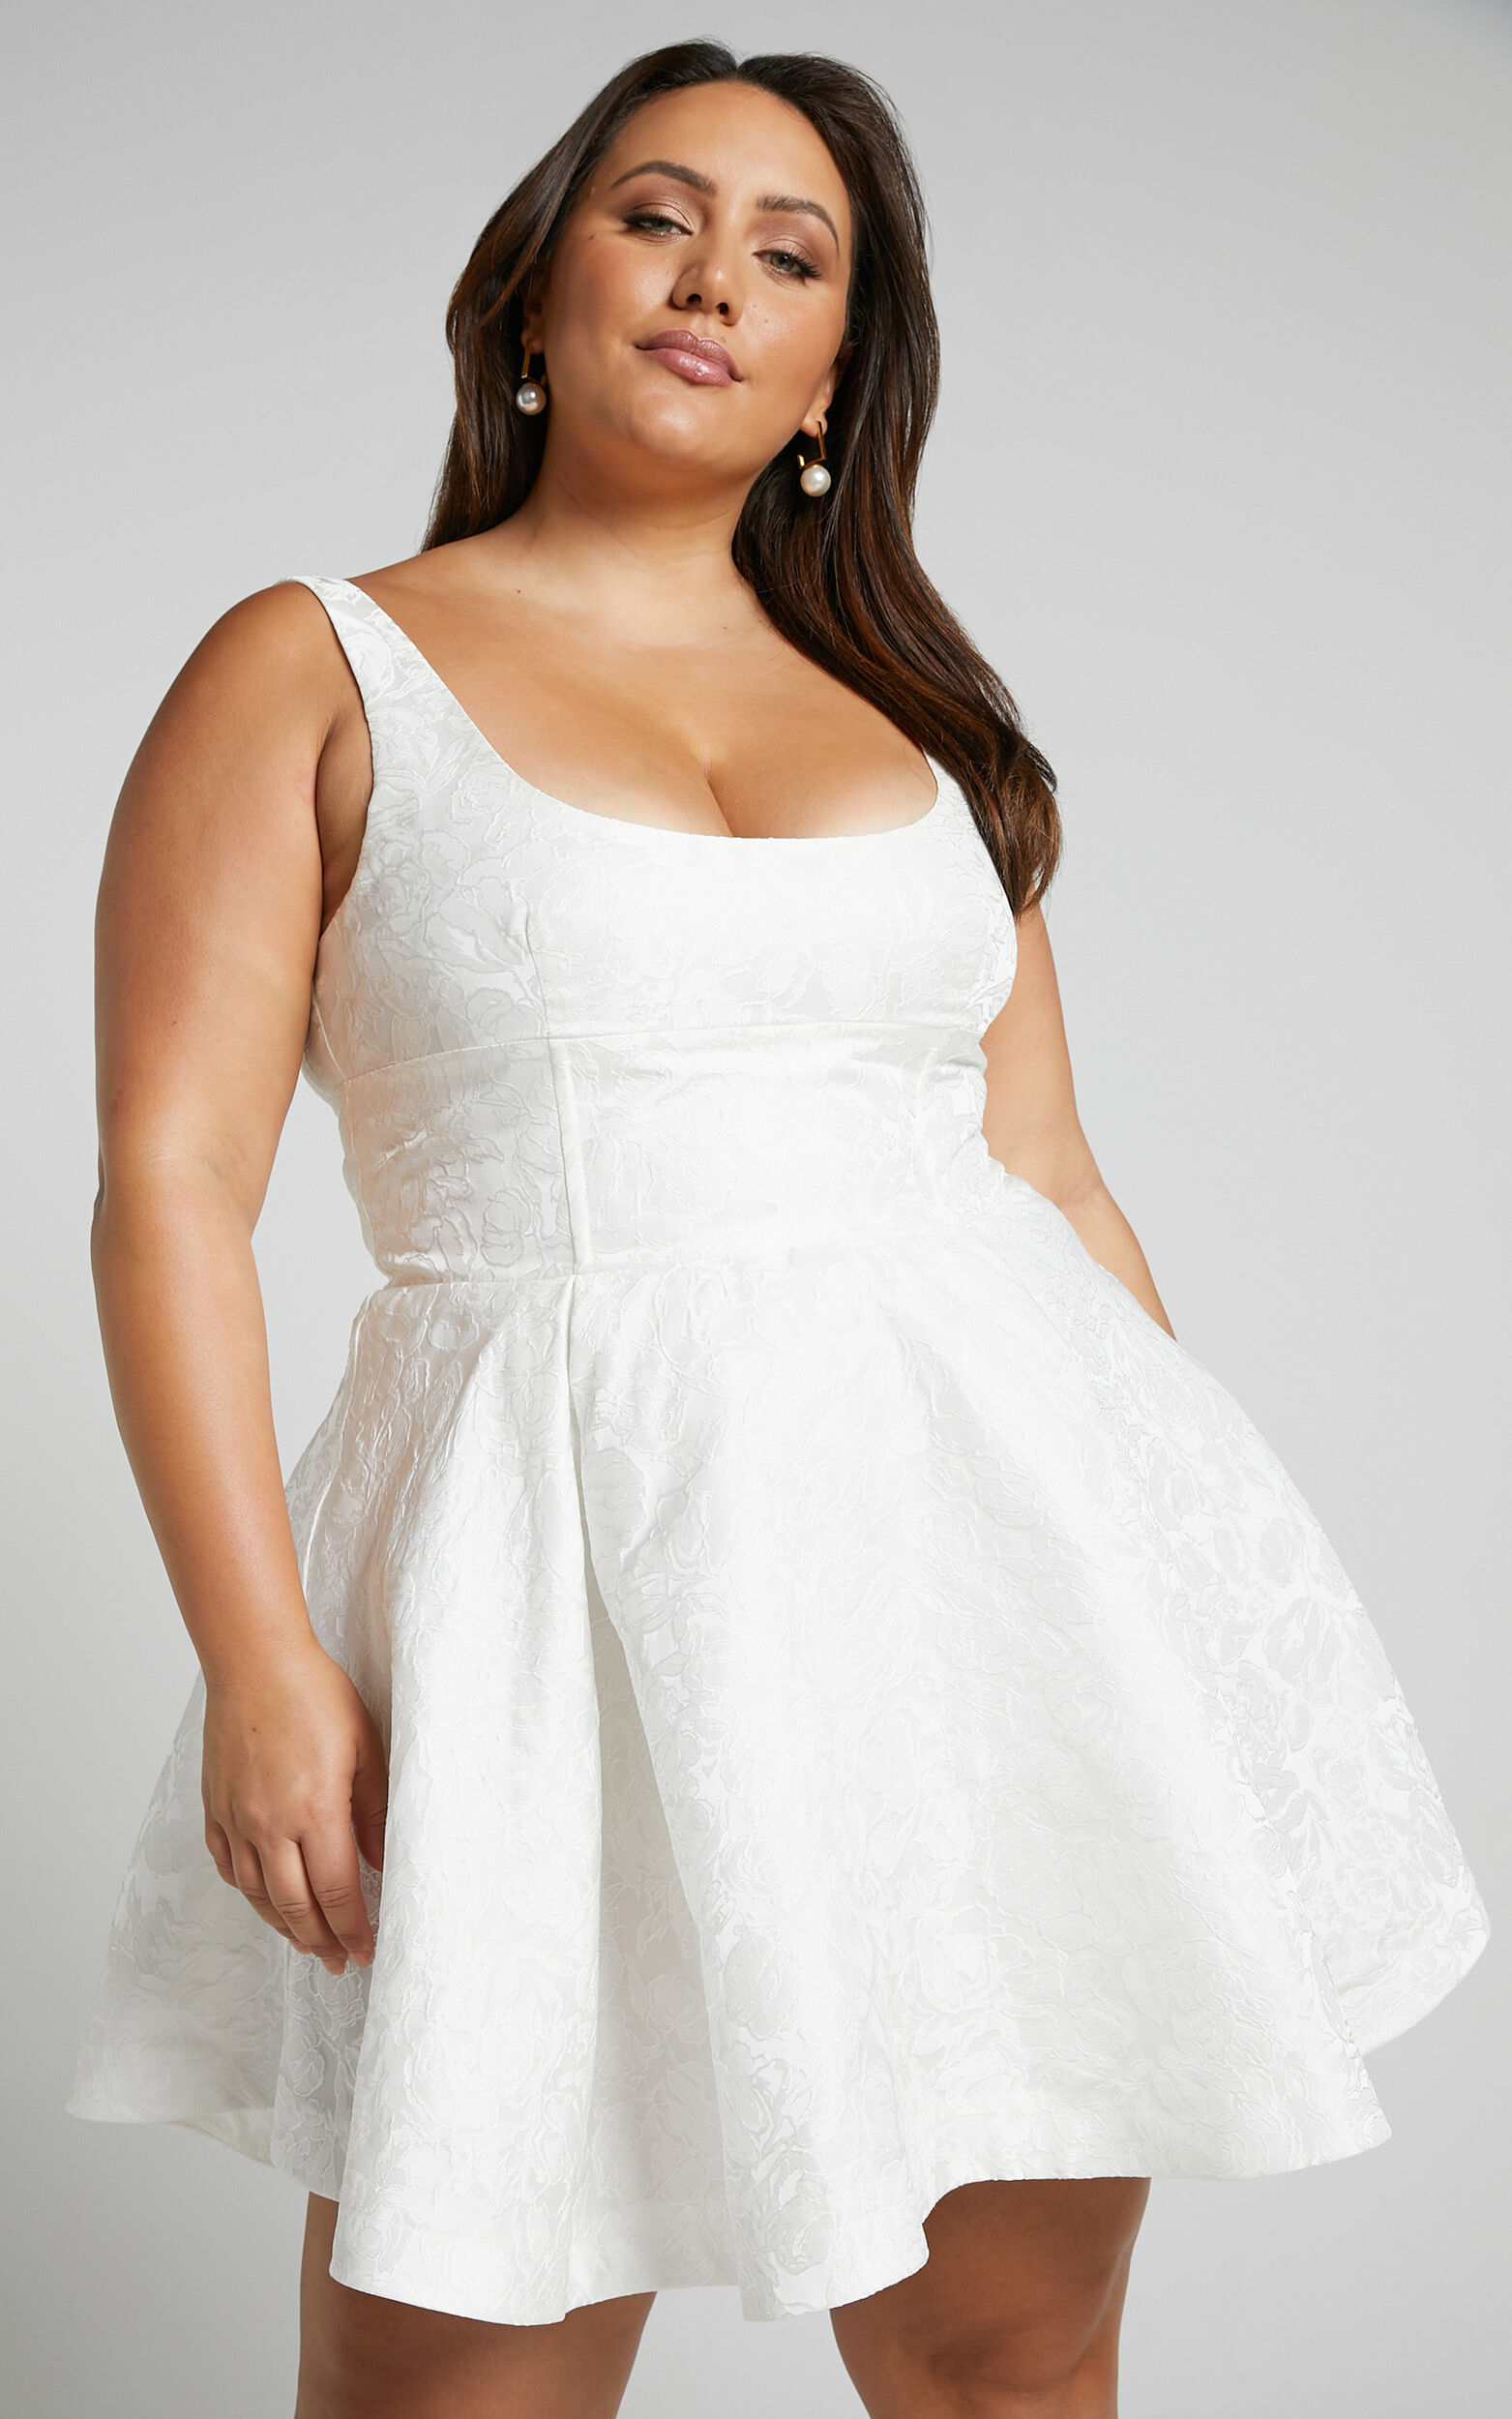 corset outerwear - Google Search  Plus size corset dress, Plus